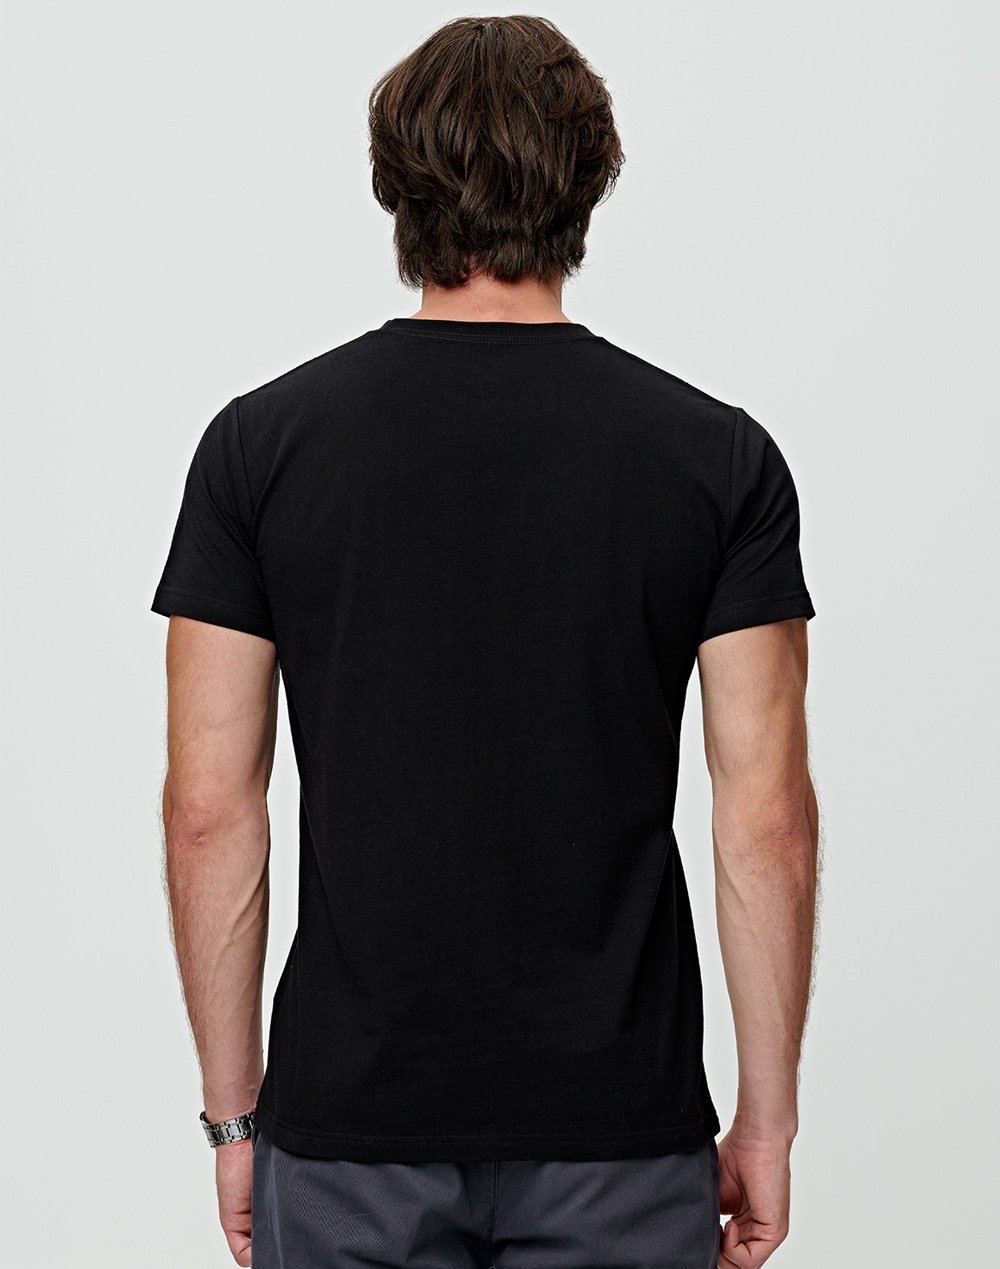 Custom Printed Premium T-Shirt Men's Online in Perth Australia